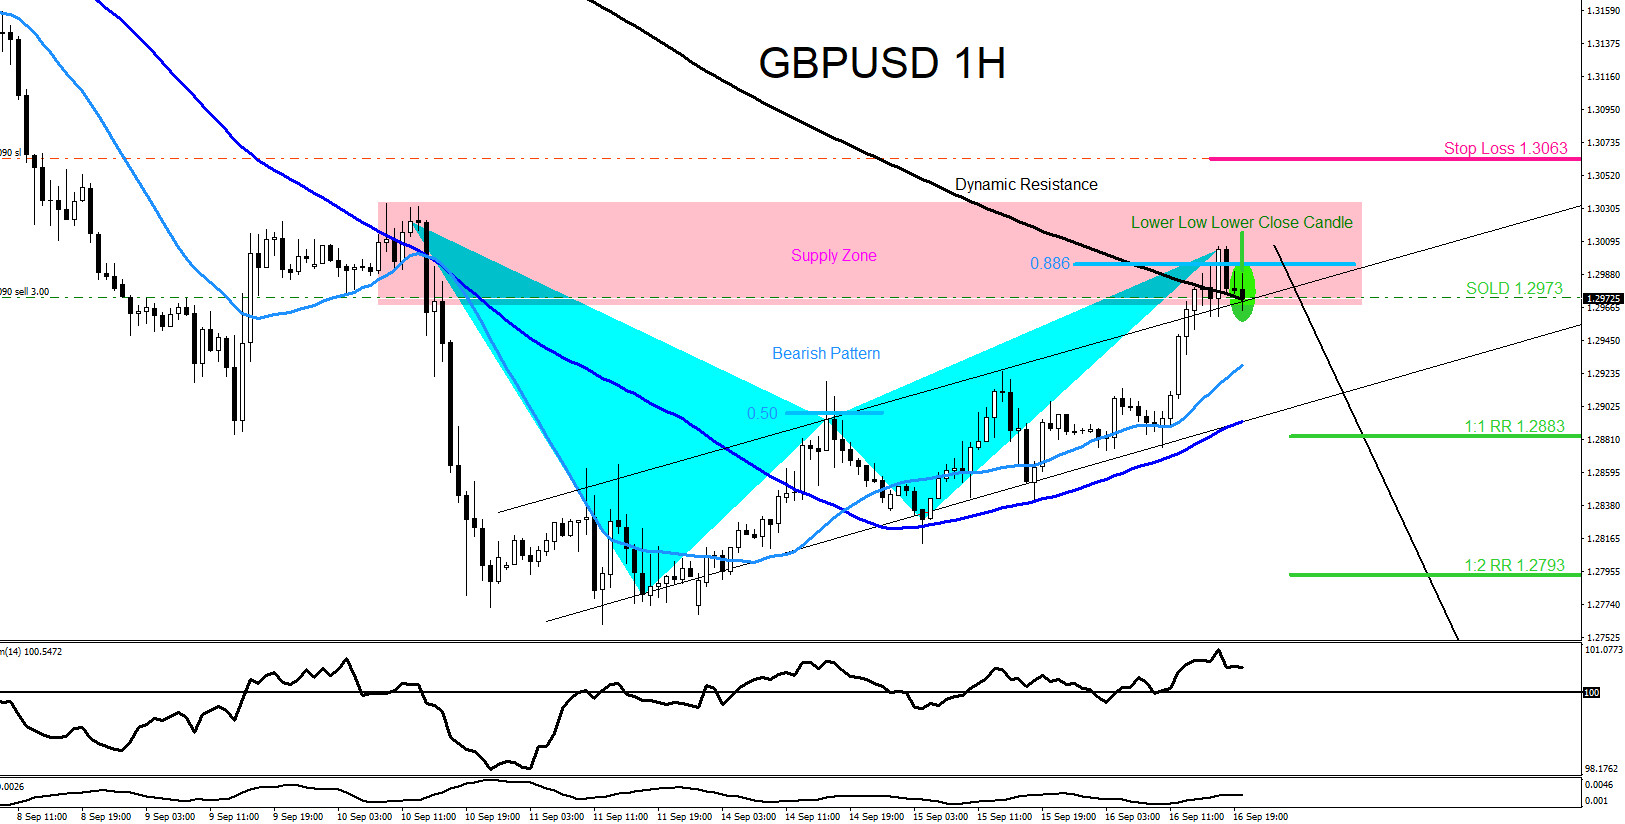 GBPUSD : Visible Bearish Market Pattern Hitting a Resistance Zone